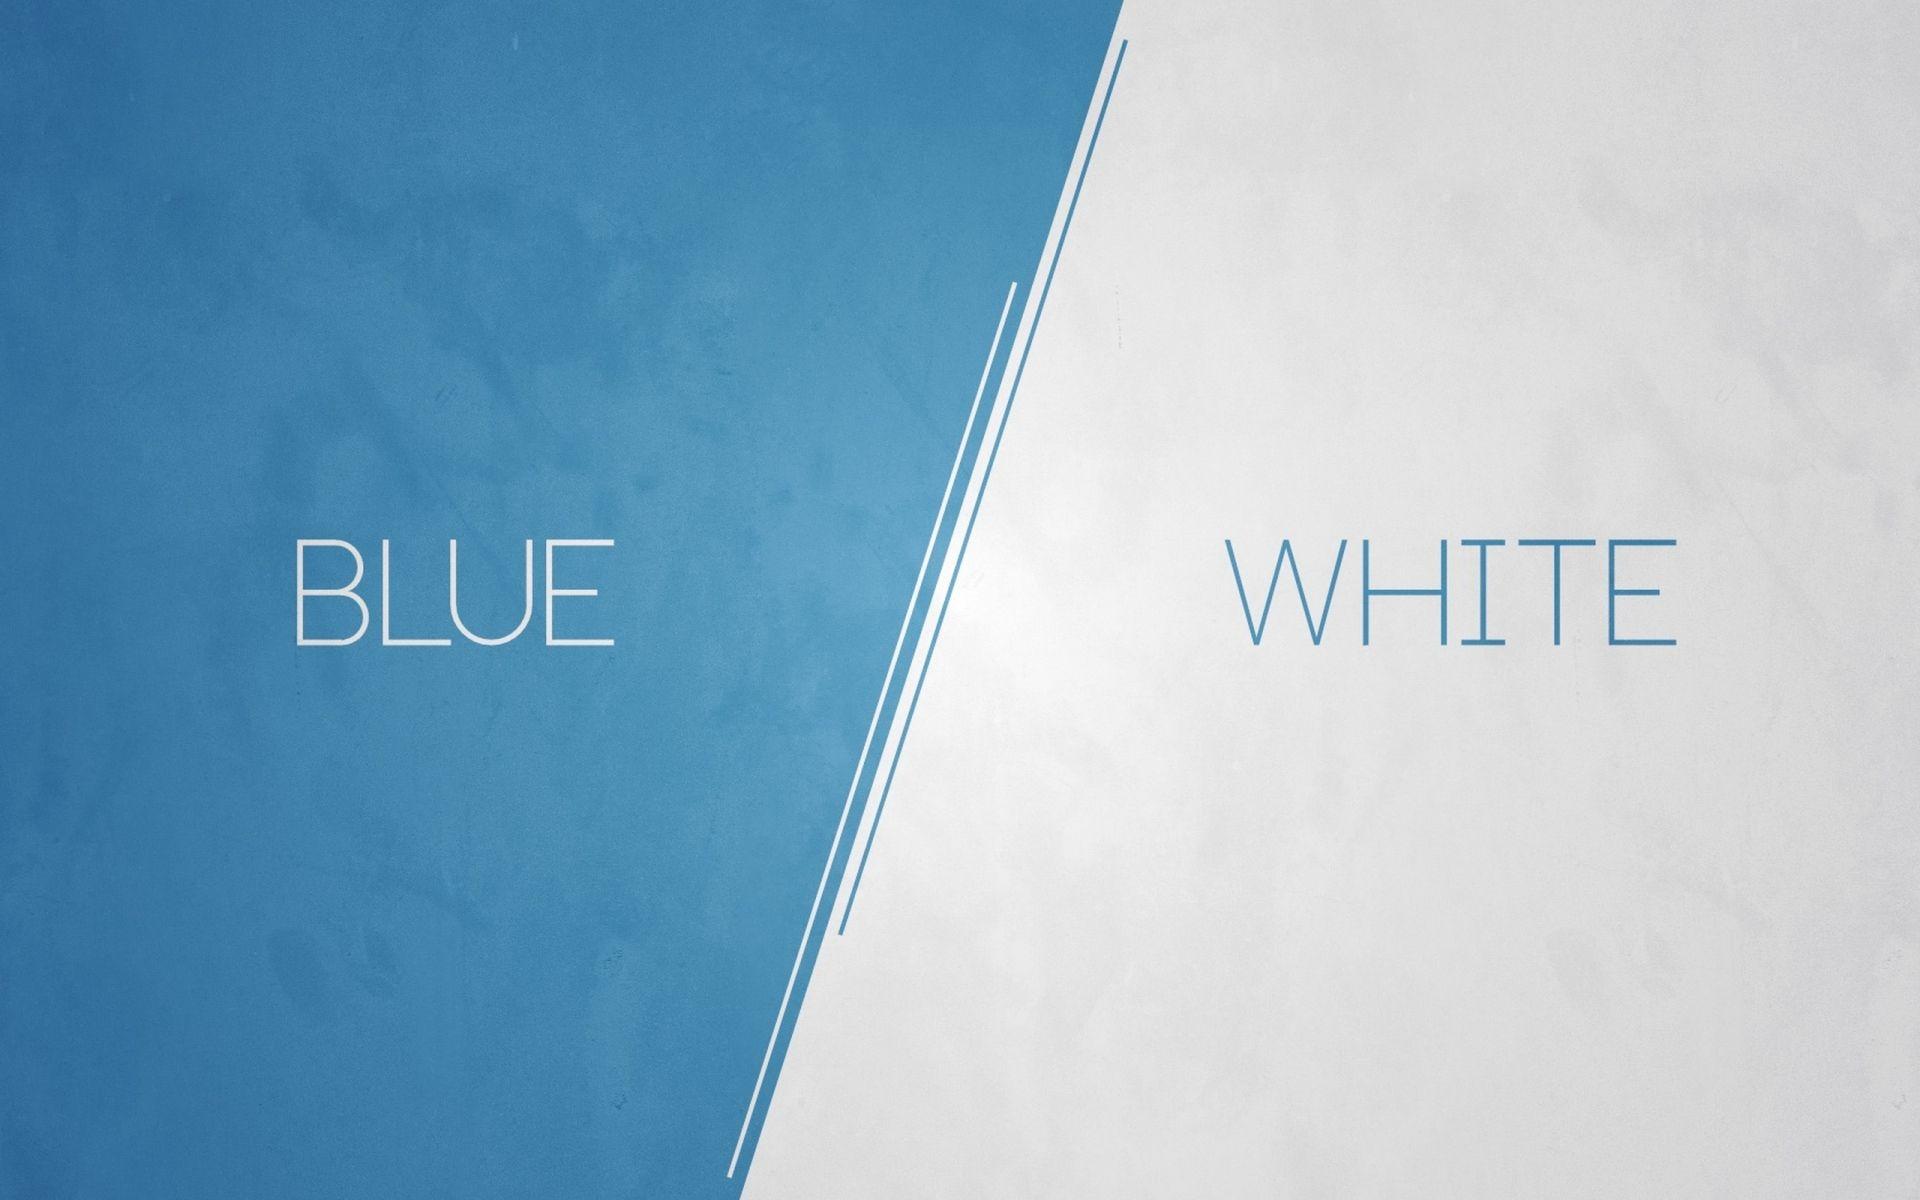 Download Wallpaper 1920x1200 White, Blue, Lettering 1920x1200 HD